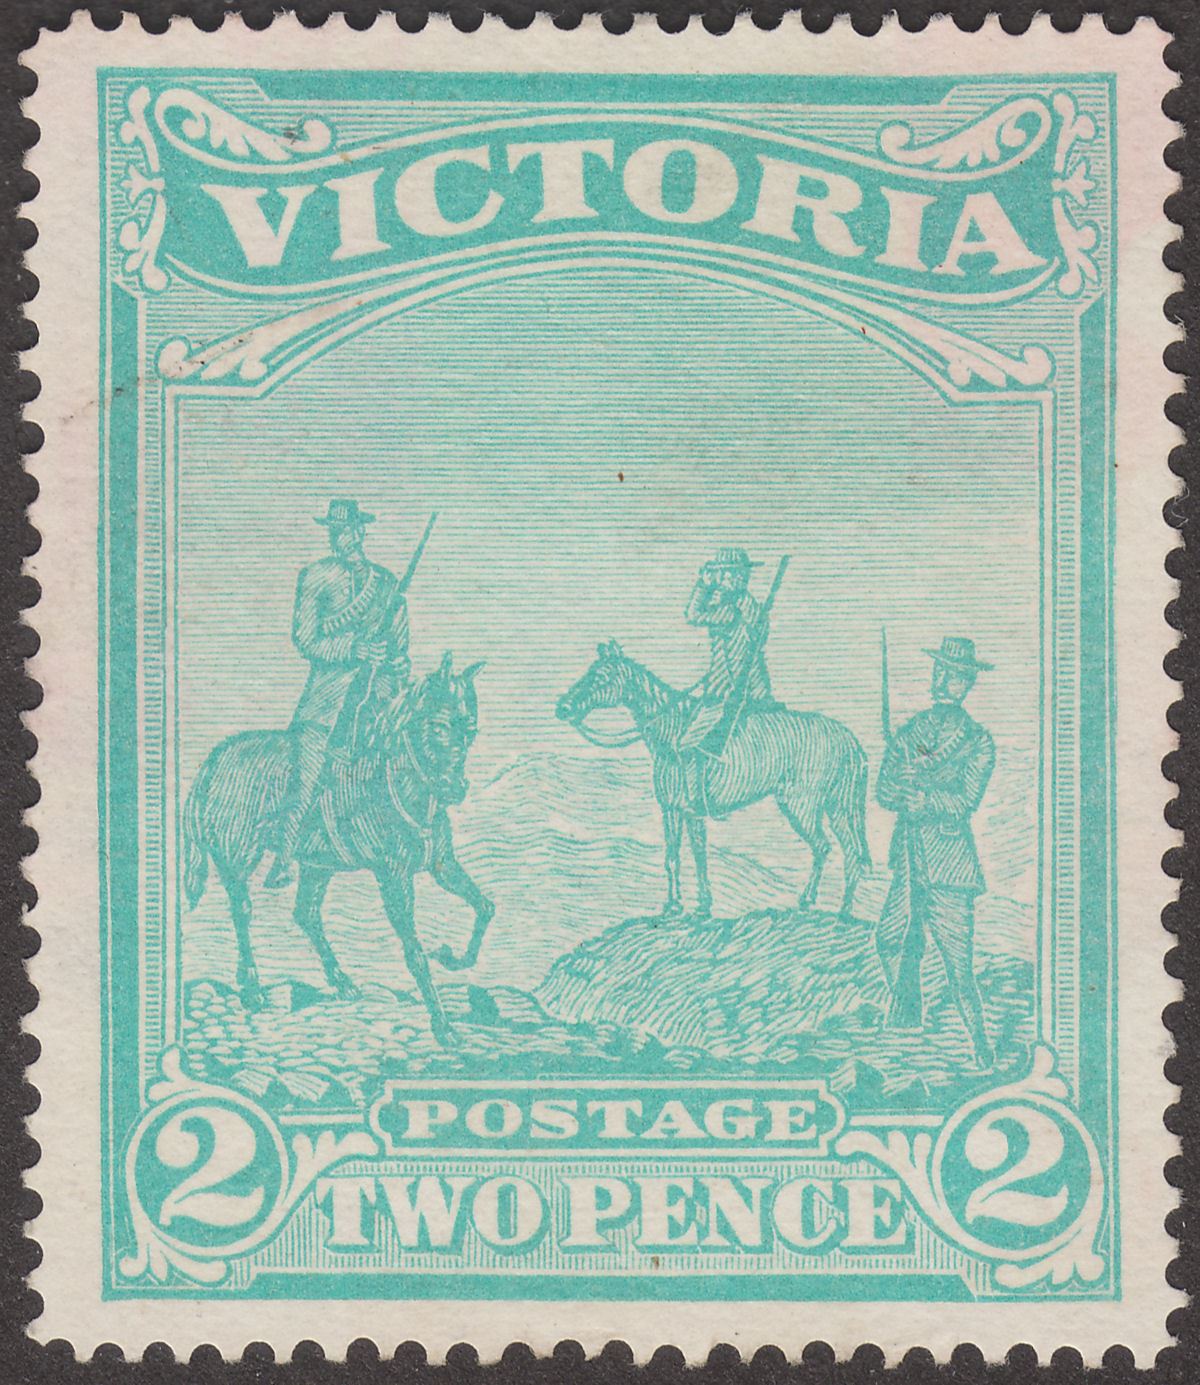 Victoria 1900 QV Charity Stamp 2d Green Unused SG375 cat £300 as mint Australia